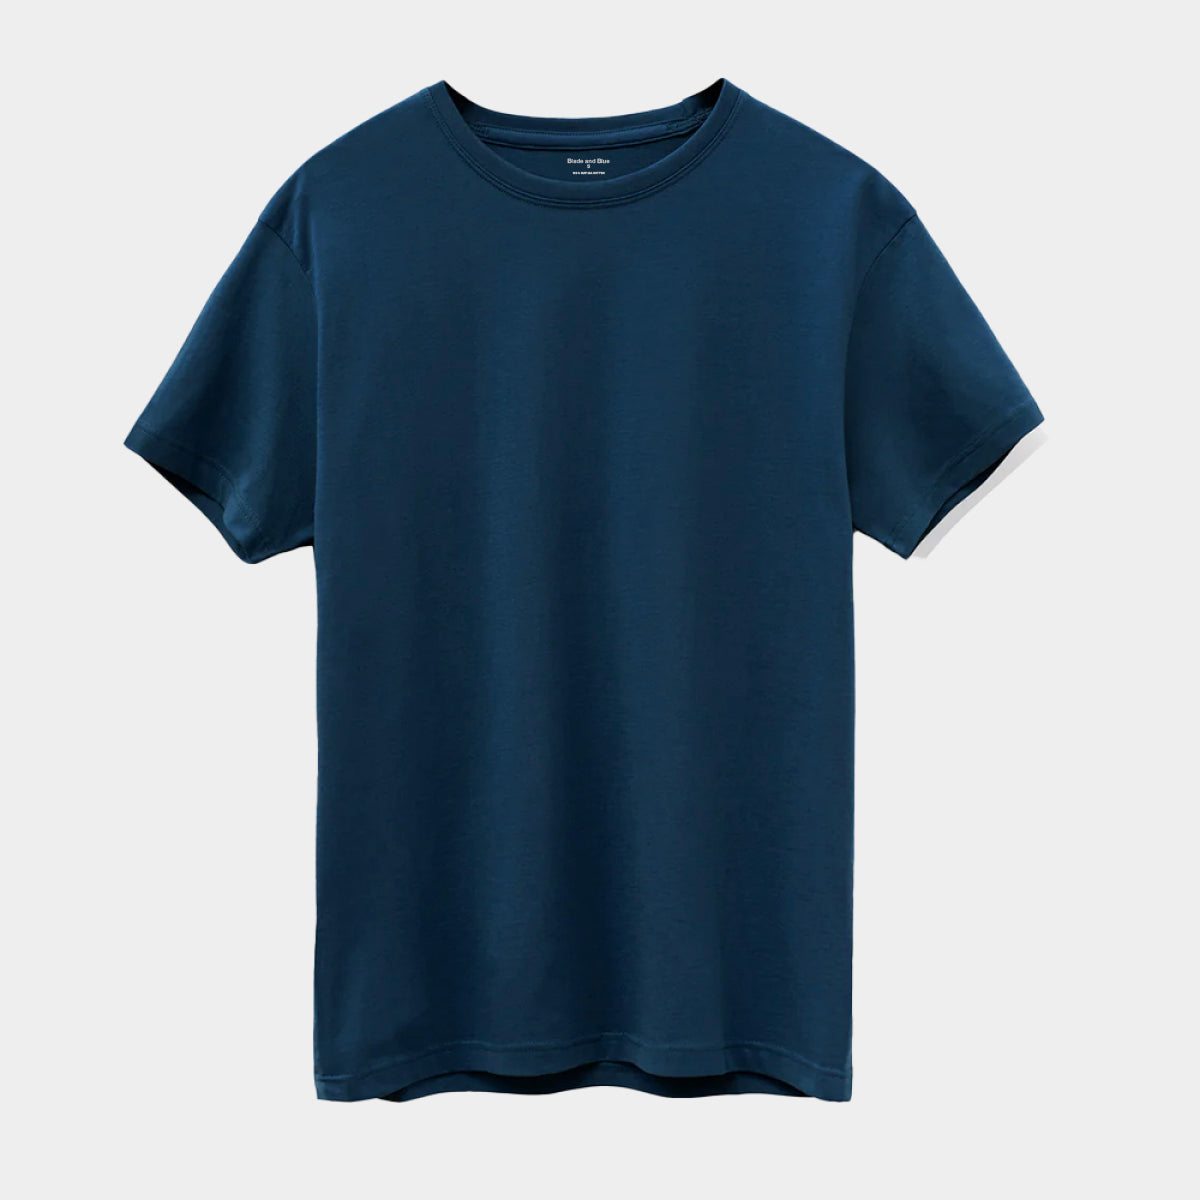 Navy Blue Supima Cotton T-Shirt